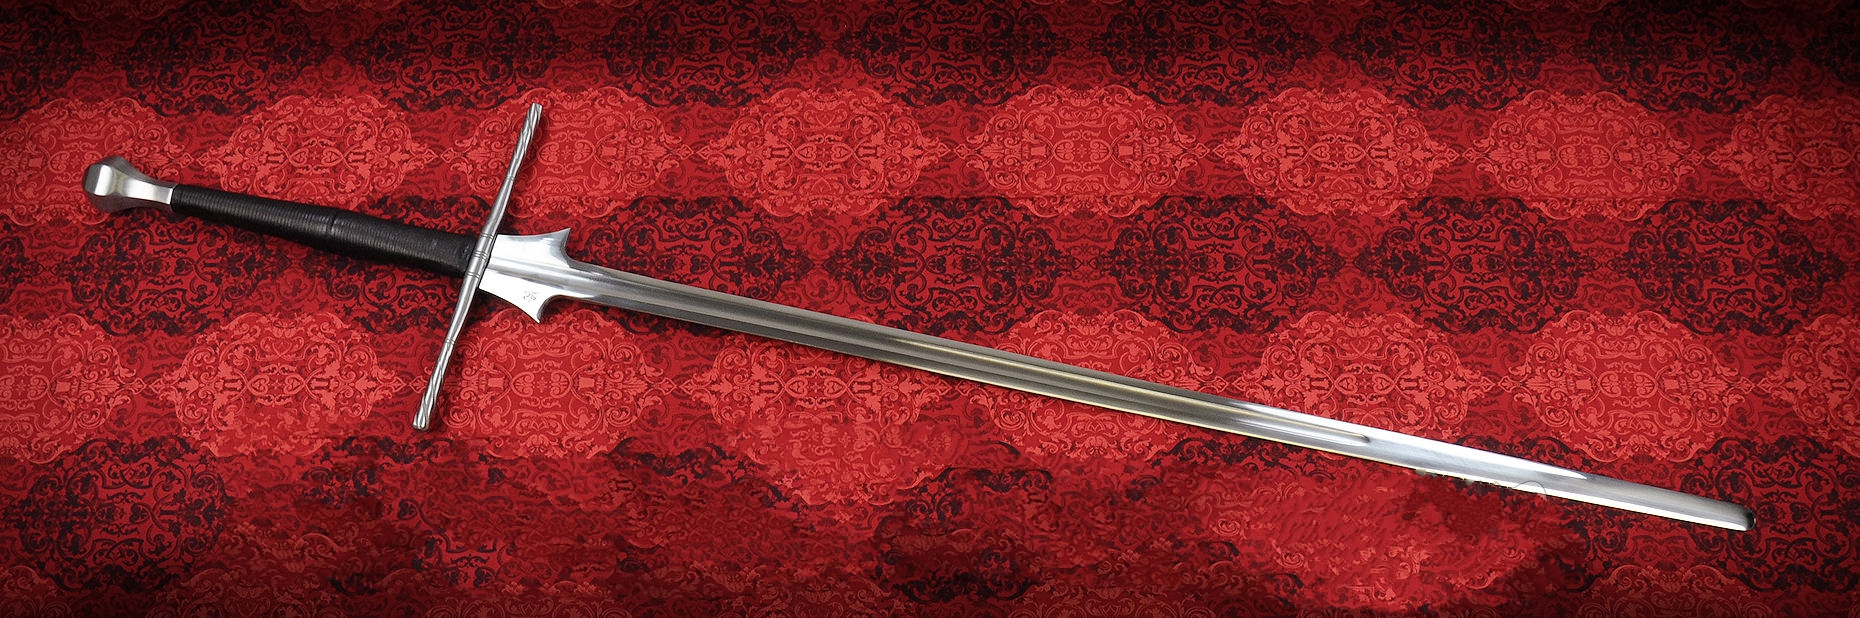 Шпага на XVIII век для исторического фехтования